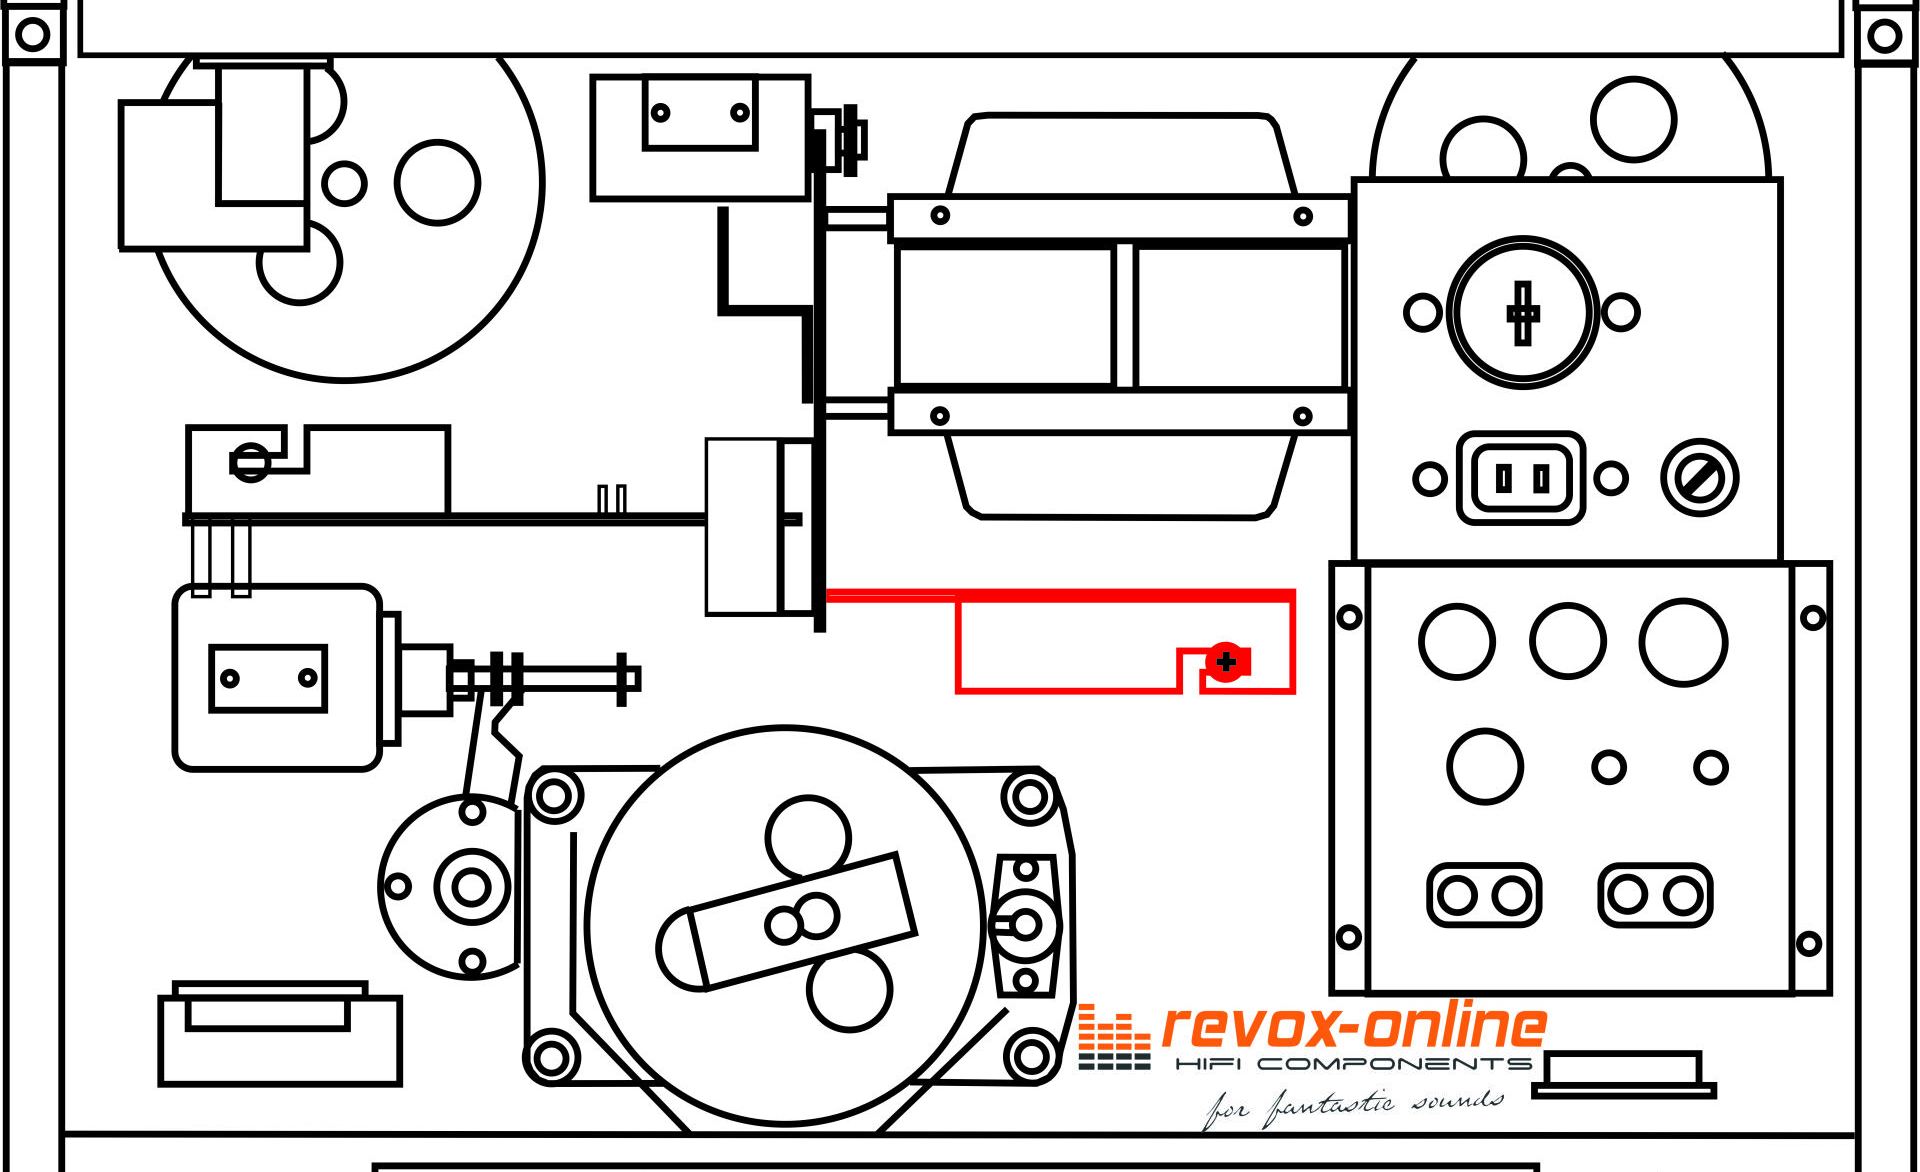 Expansion of Revox B77 Capstan motor control, revox-online